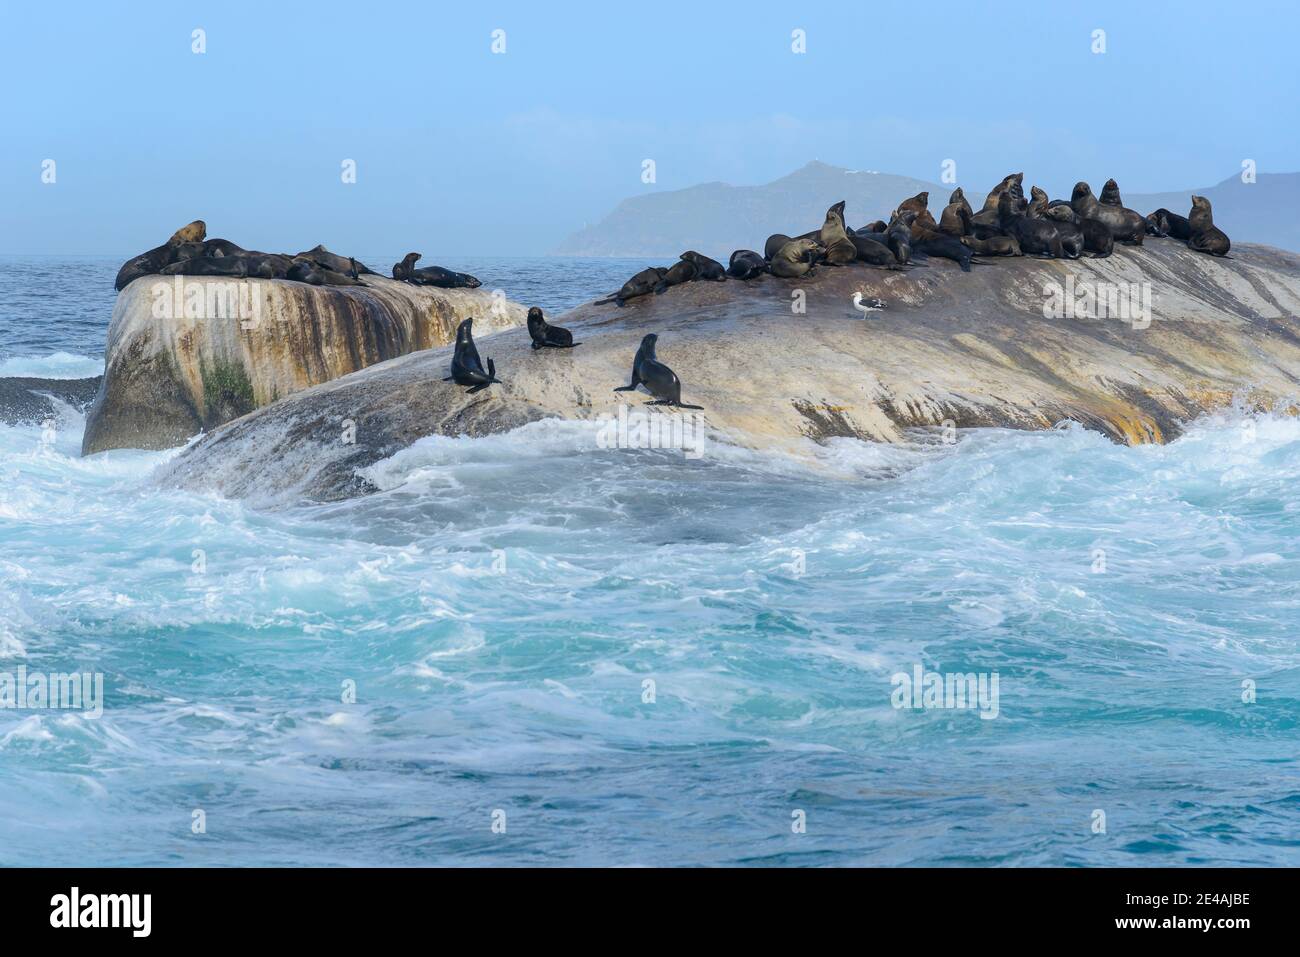 Südafrikanische Pelzrobbe (Arctocephalus pusillus pusillus), Kolonie von Seehunden auf Felsen im Meer, False Bay, Simons Town, Südafrika, Indischer Ozean Stockfoto